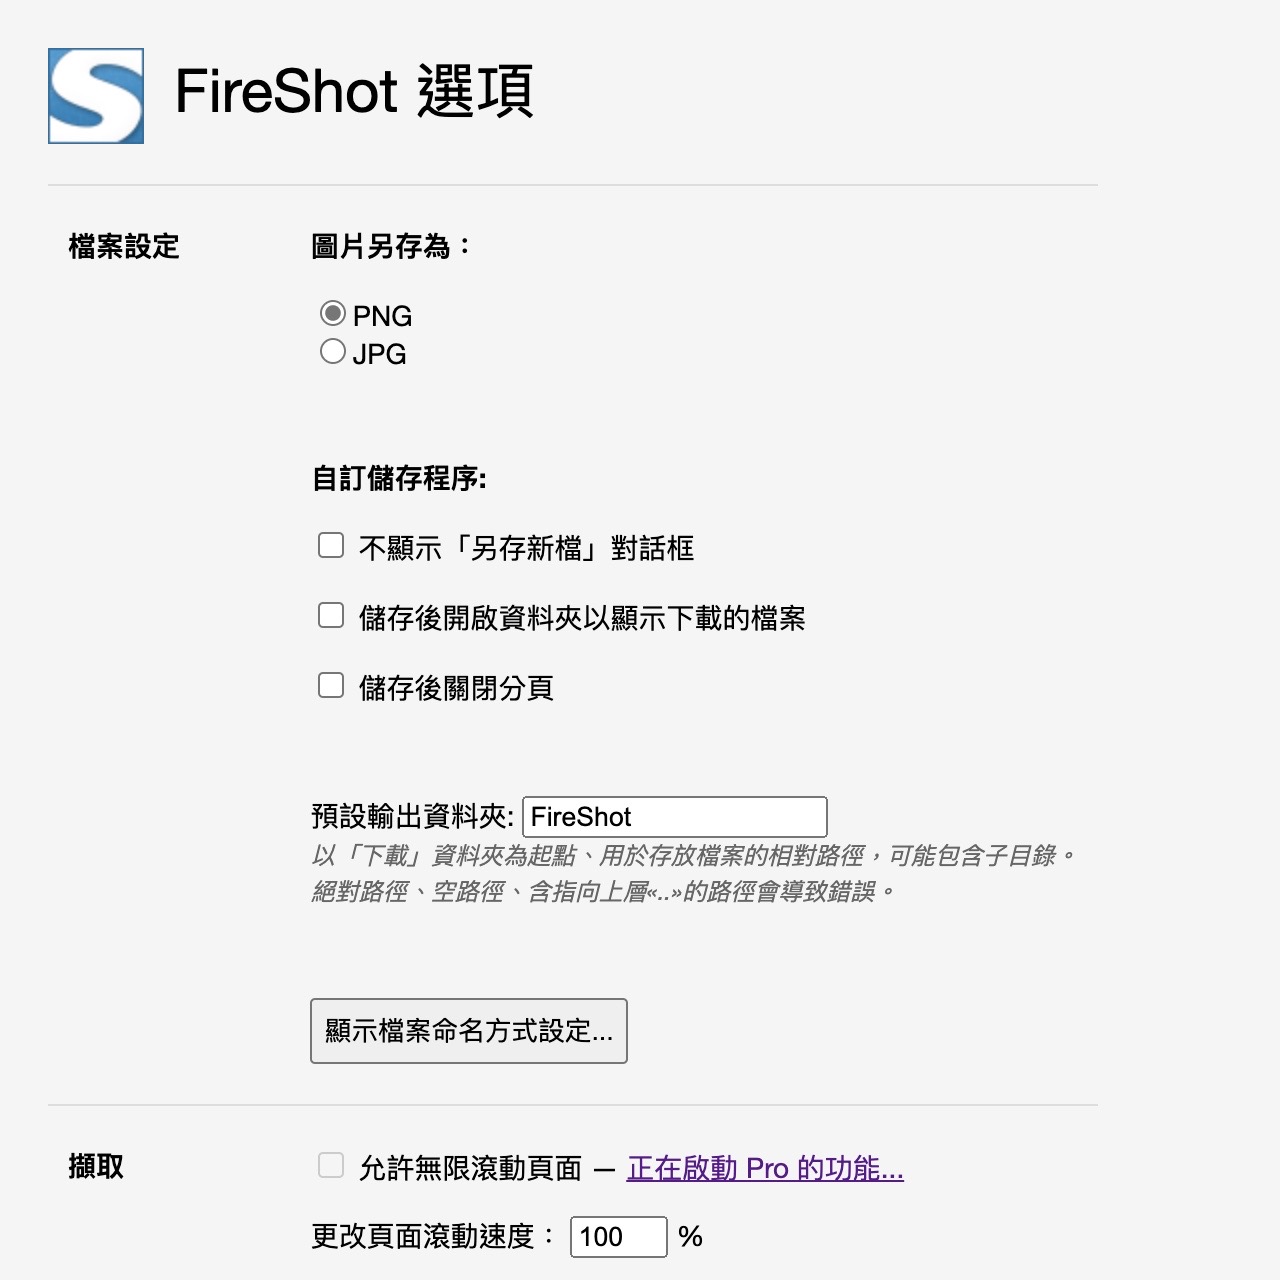 FireShot